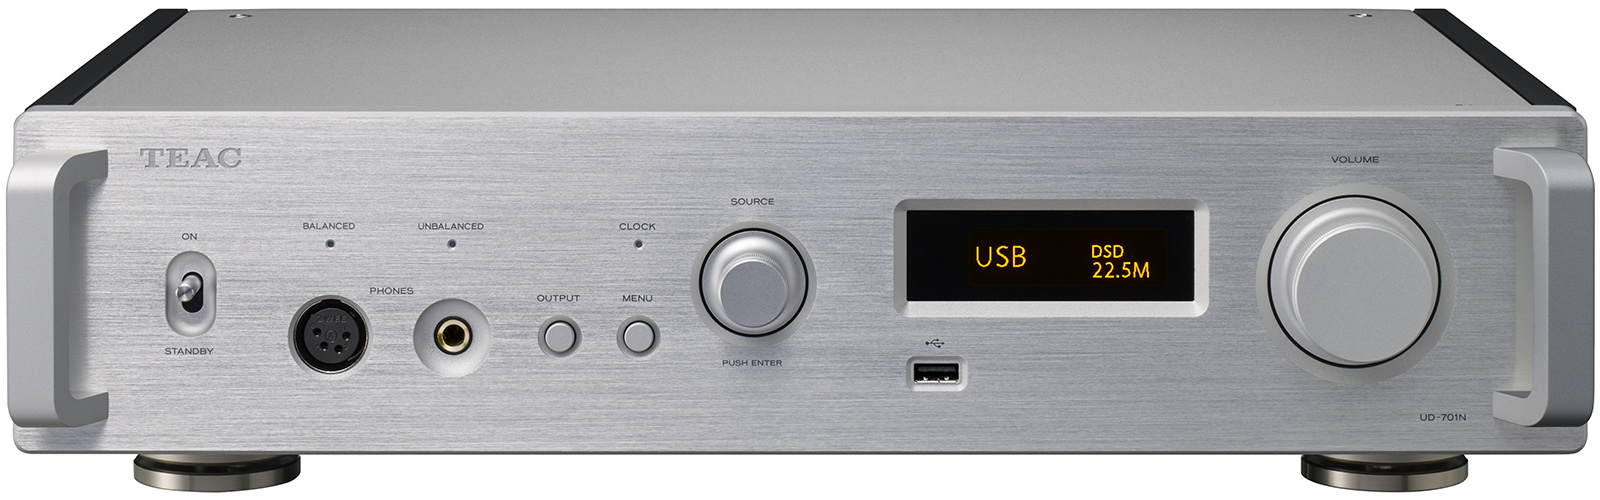 Сетевые аудио проигрыватели Teac UD-701N silver сетевые аудио проигрыватели rose rs520 silver